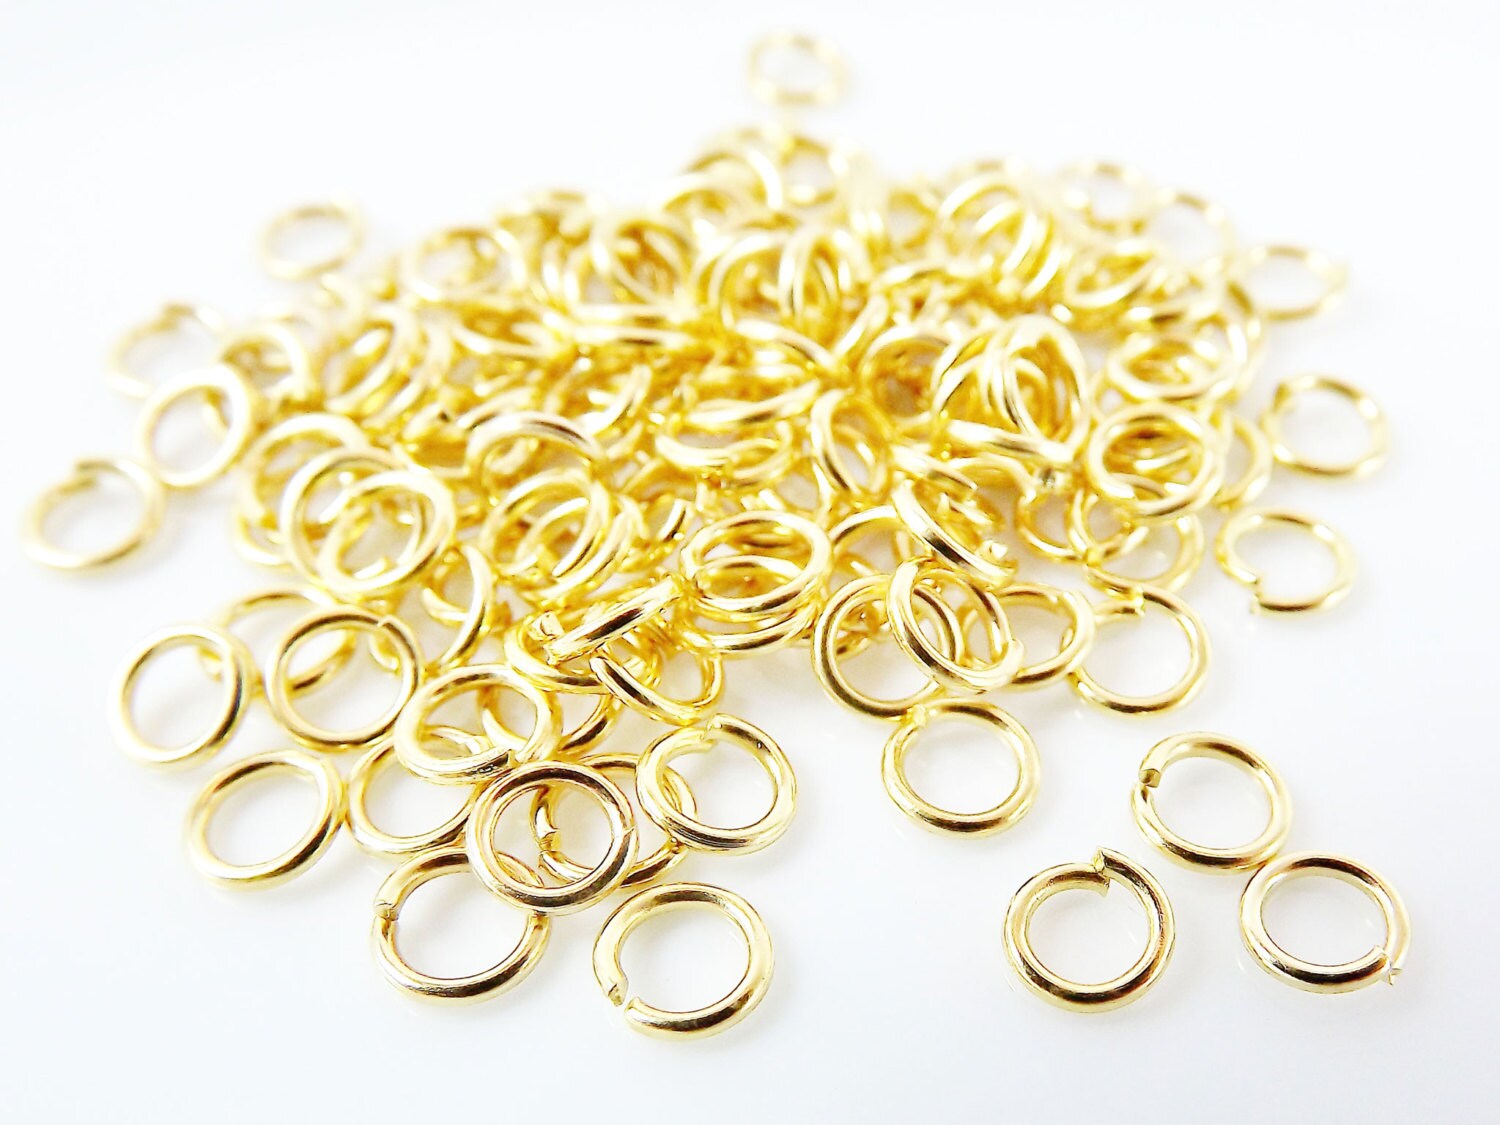 Wholesale Brass Adjustable Ring Findings - Pandahall.com